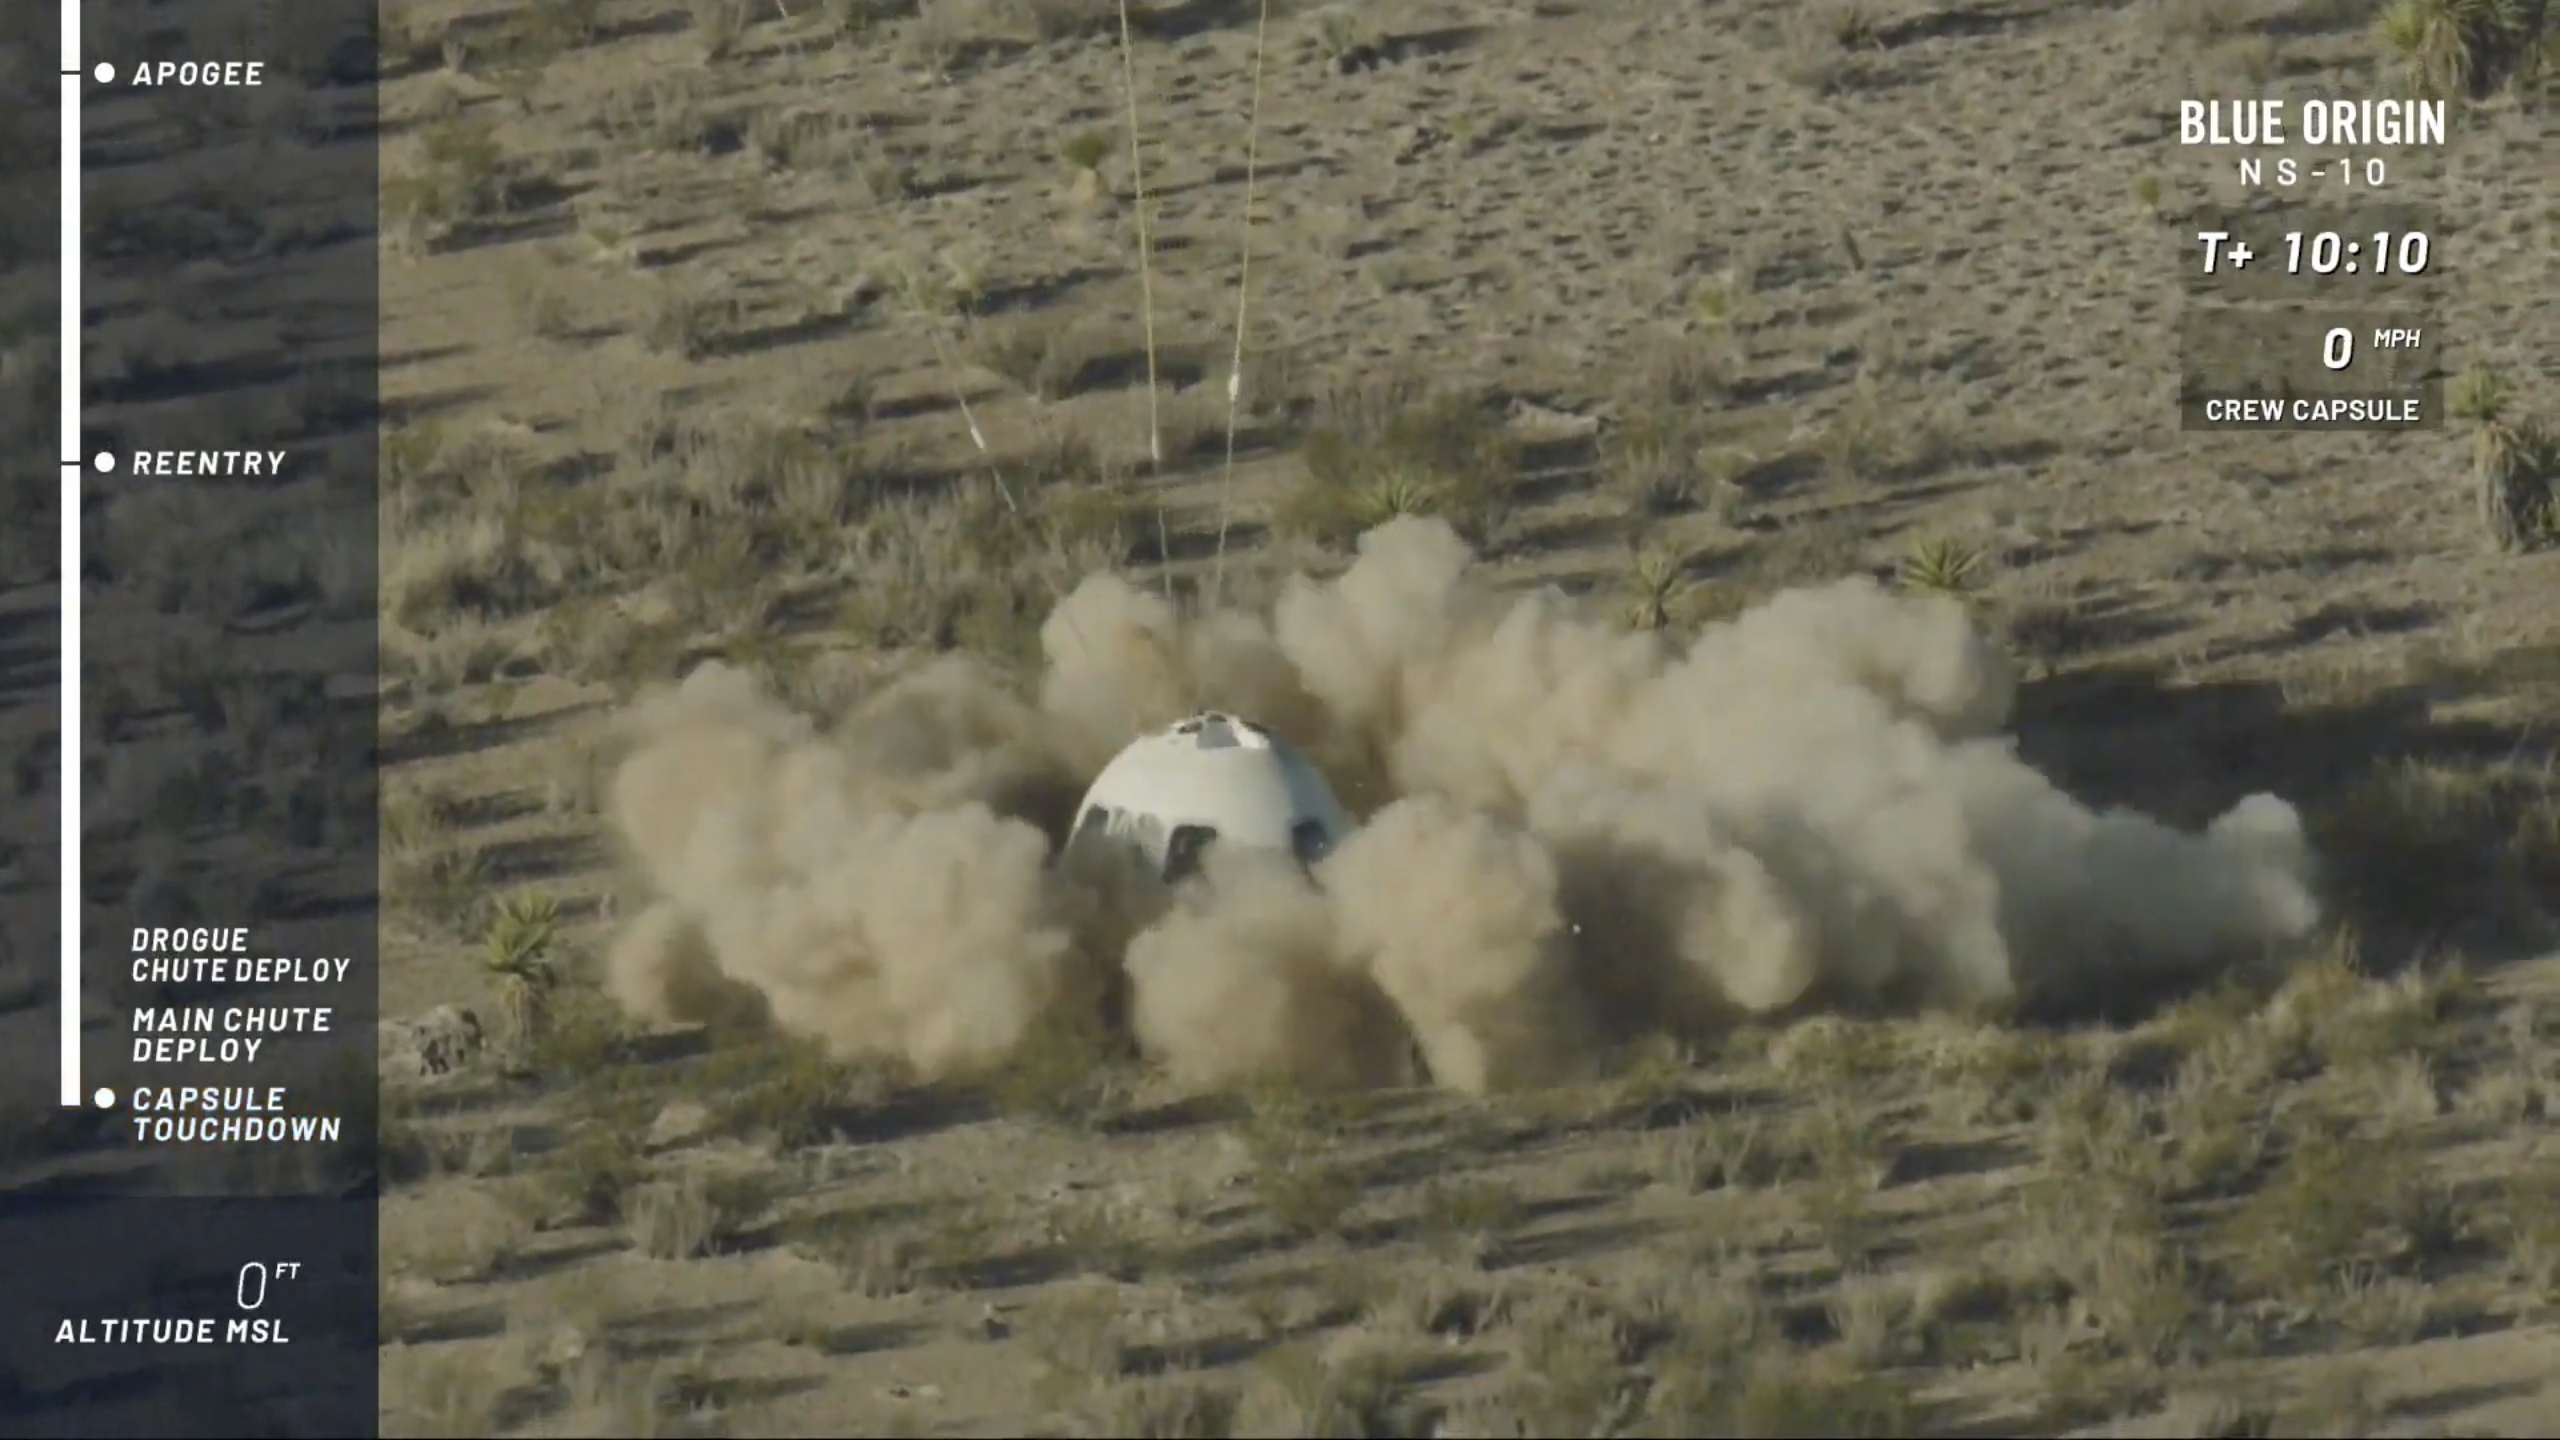 The New Shepard capsule lands at Blue Origin's site in west Texas